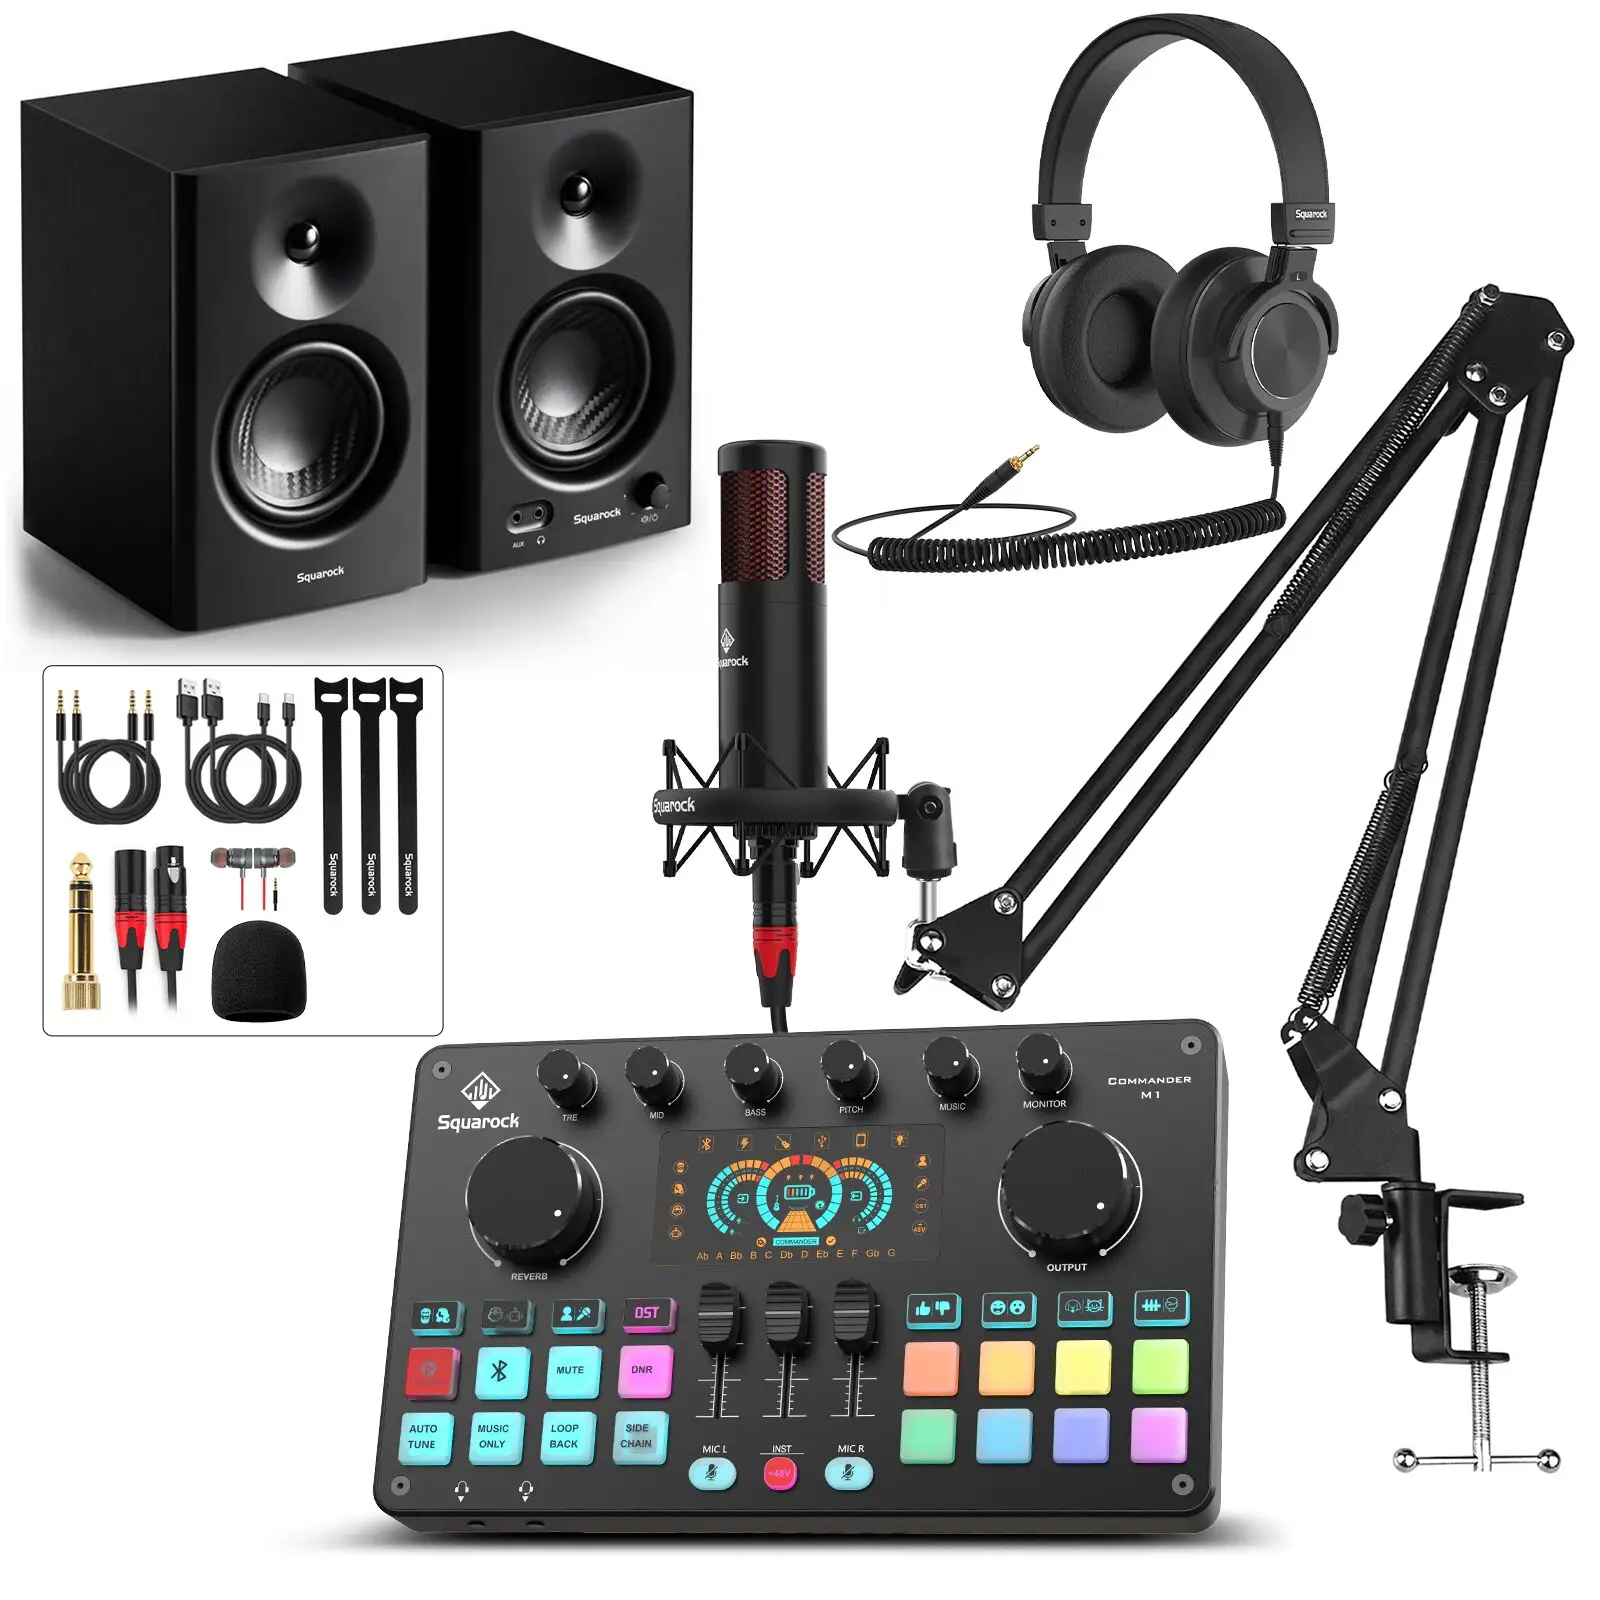 Quarock-Equipo de Estudio ecording con auriculares icrophone, kit de equipo de transmisión de Podcast, 5/48V